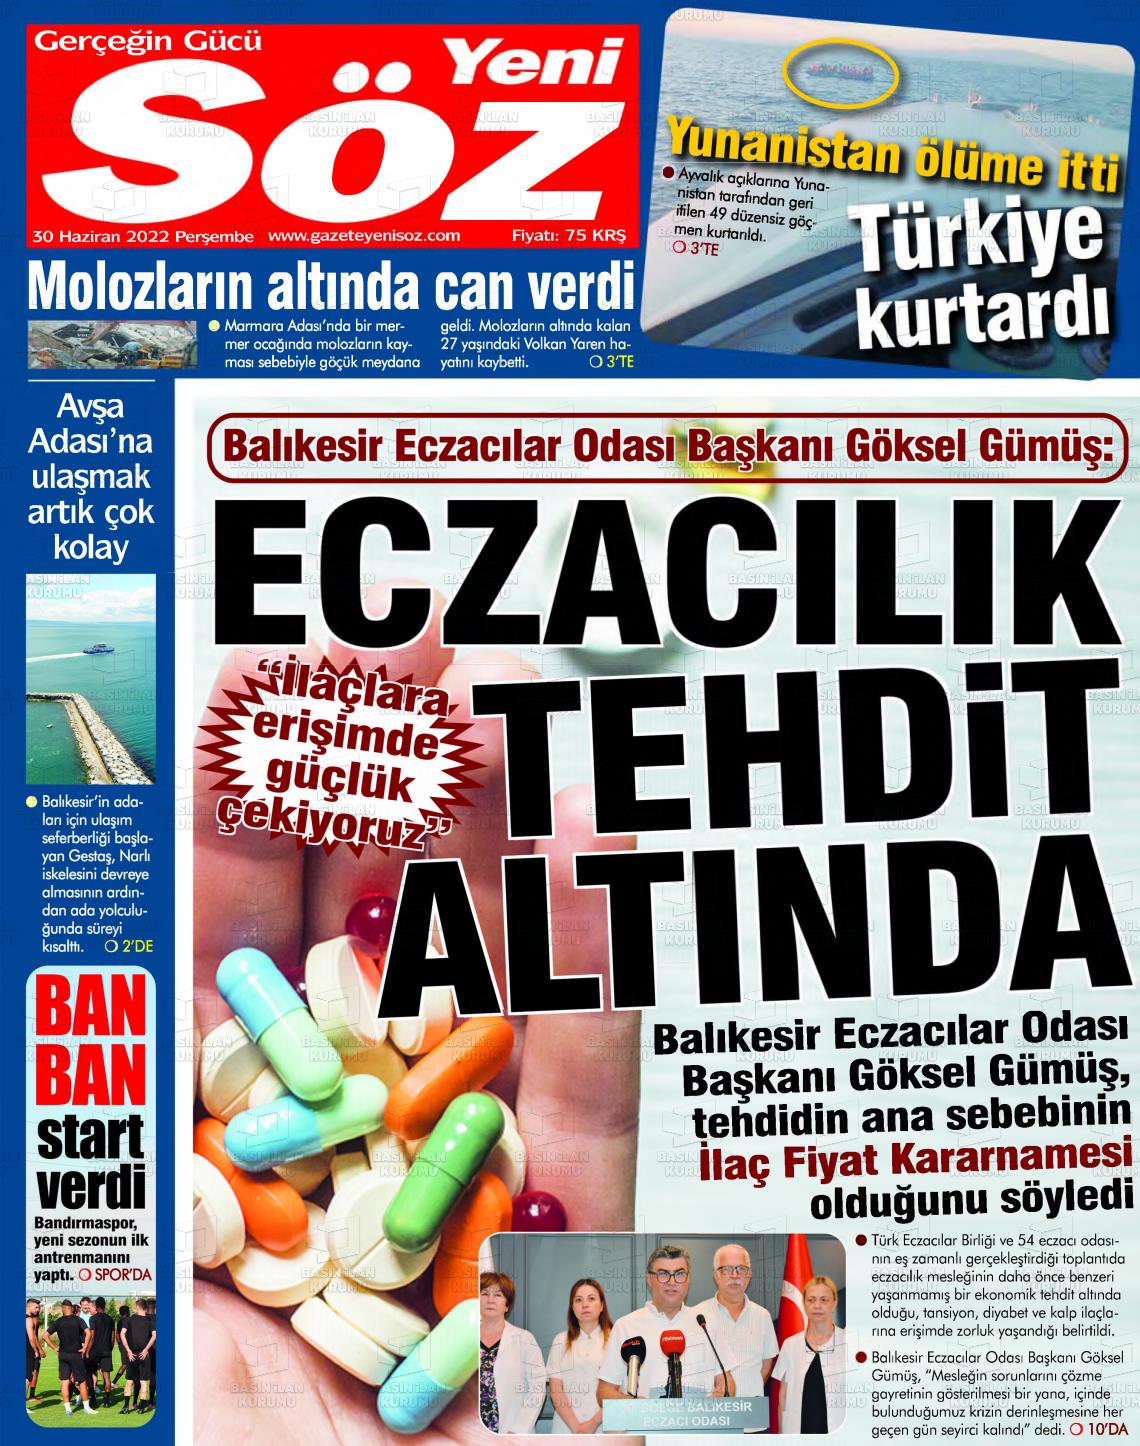 30 Haziran 2022 Yeni Söz Gazete Manşeti